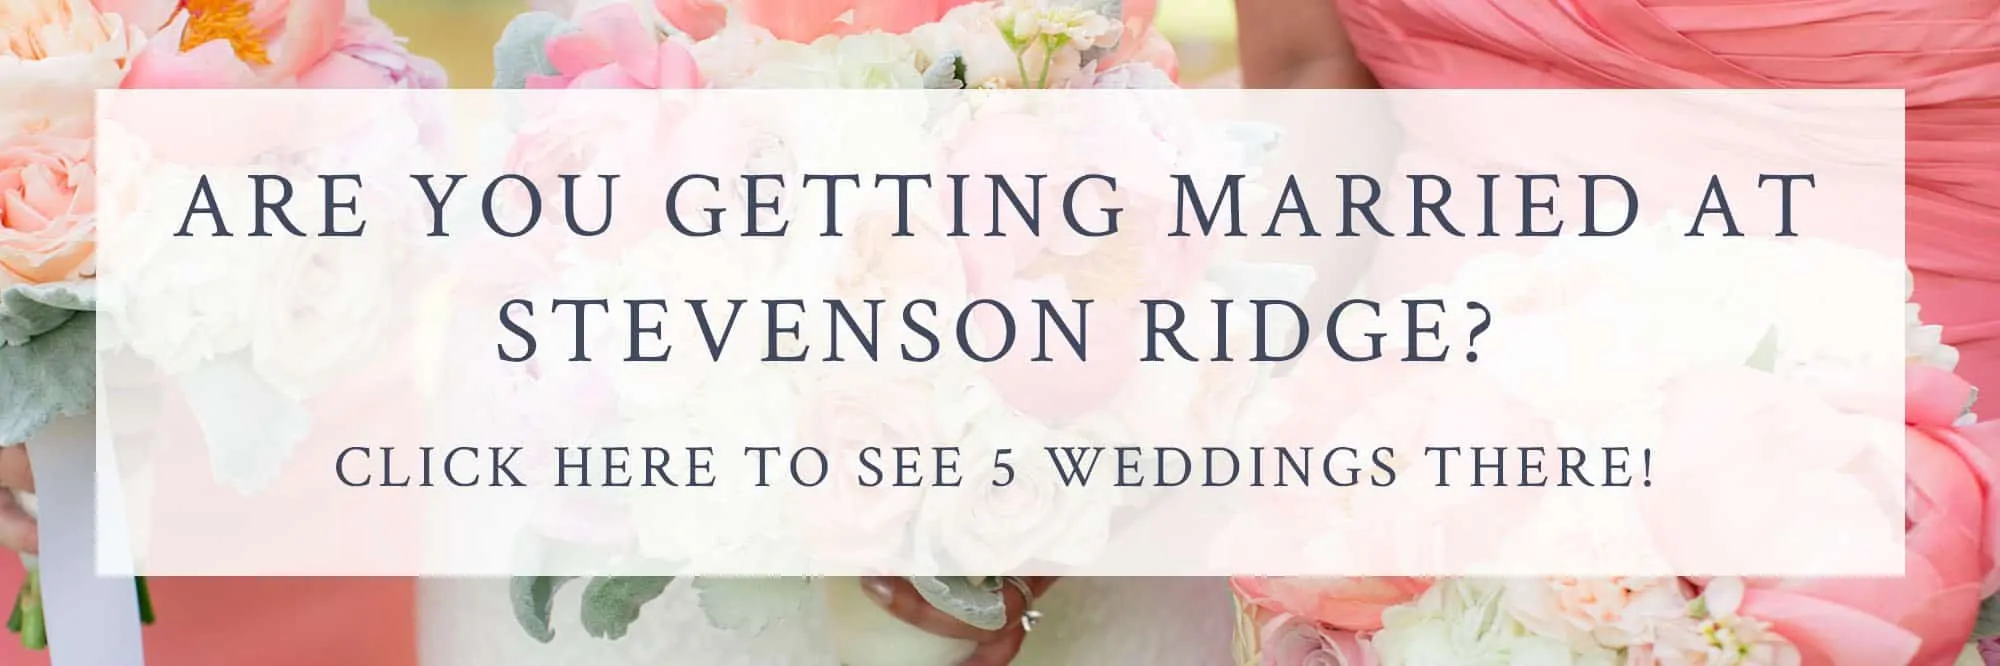 stevenson ridge weddings